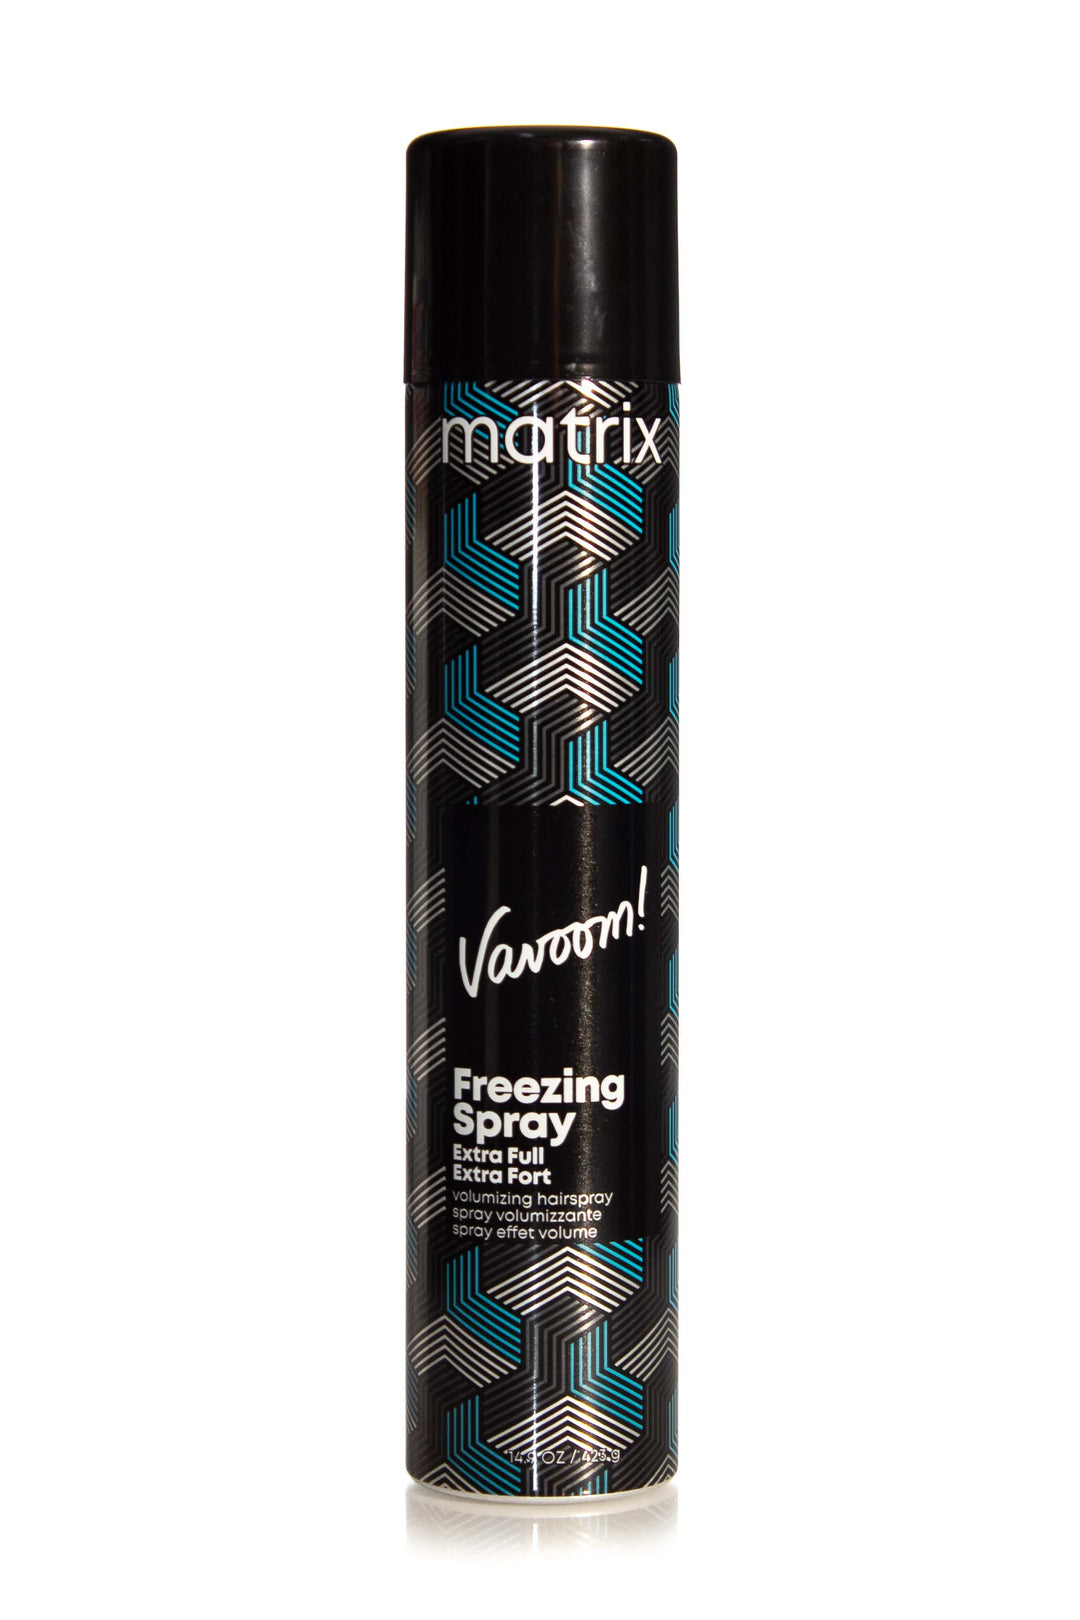 MATRIX Vavoom Freezing Spray Extra Full Volumizing Hairspray 423g | 423g